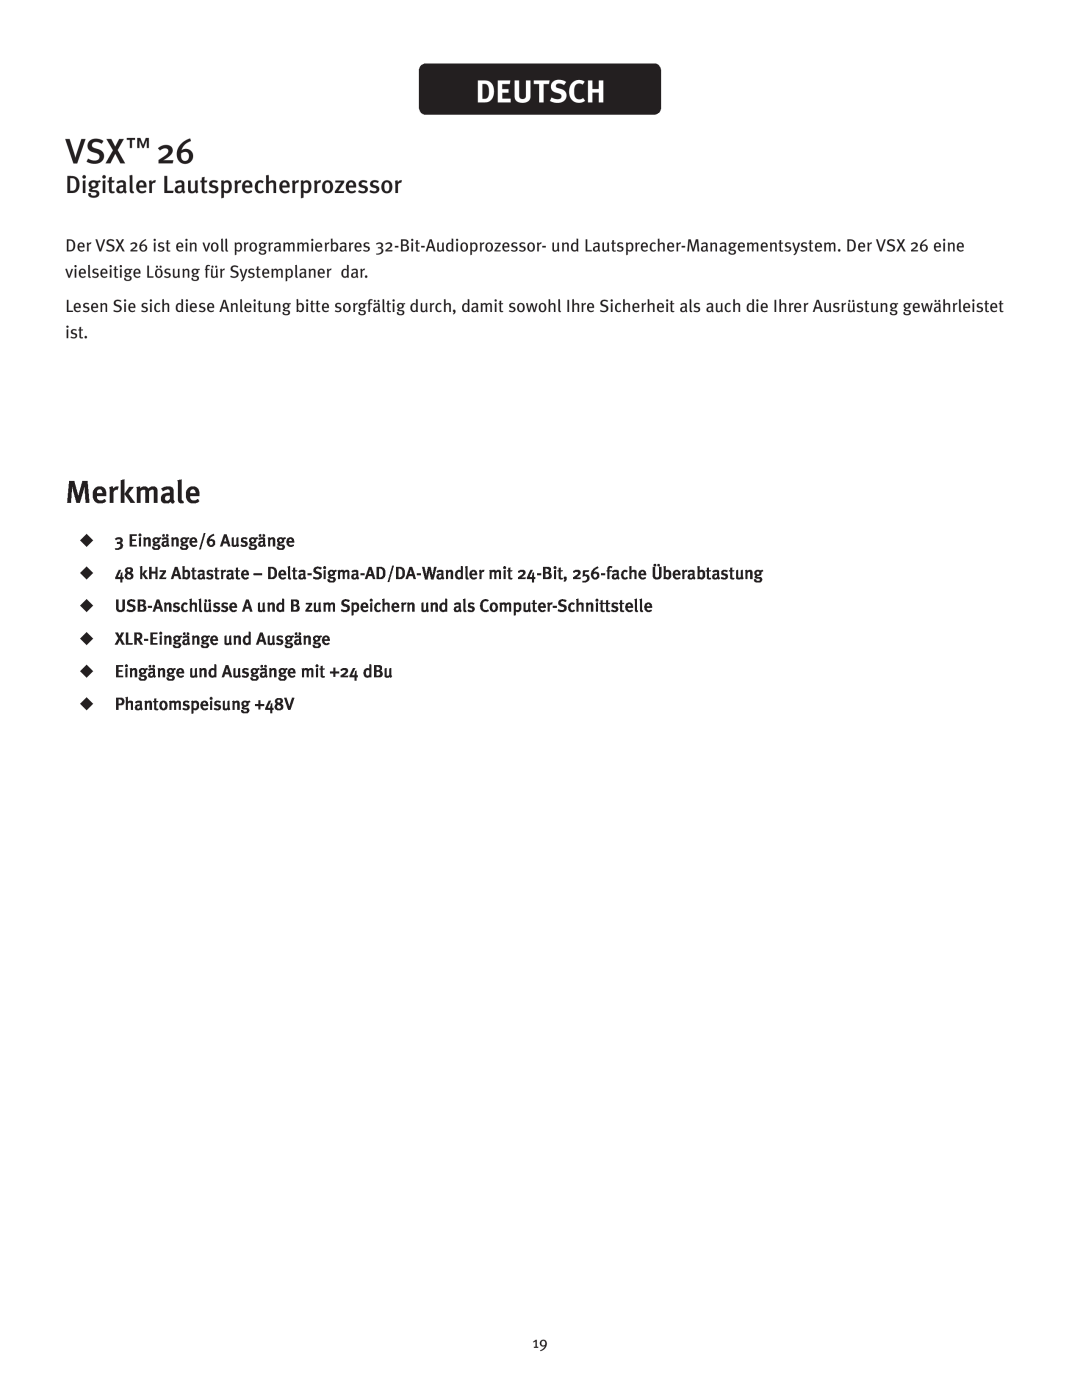 Peavey VSX 26 manual Deutsch, Merkmale, Digitaler Lautsprecherprozessor 